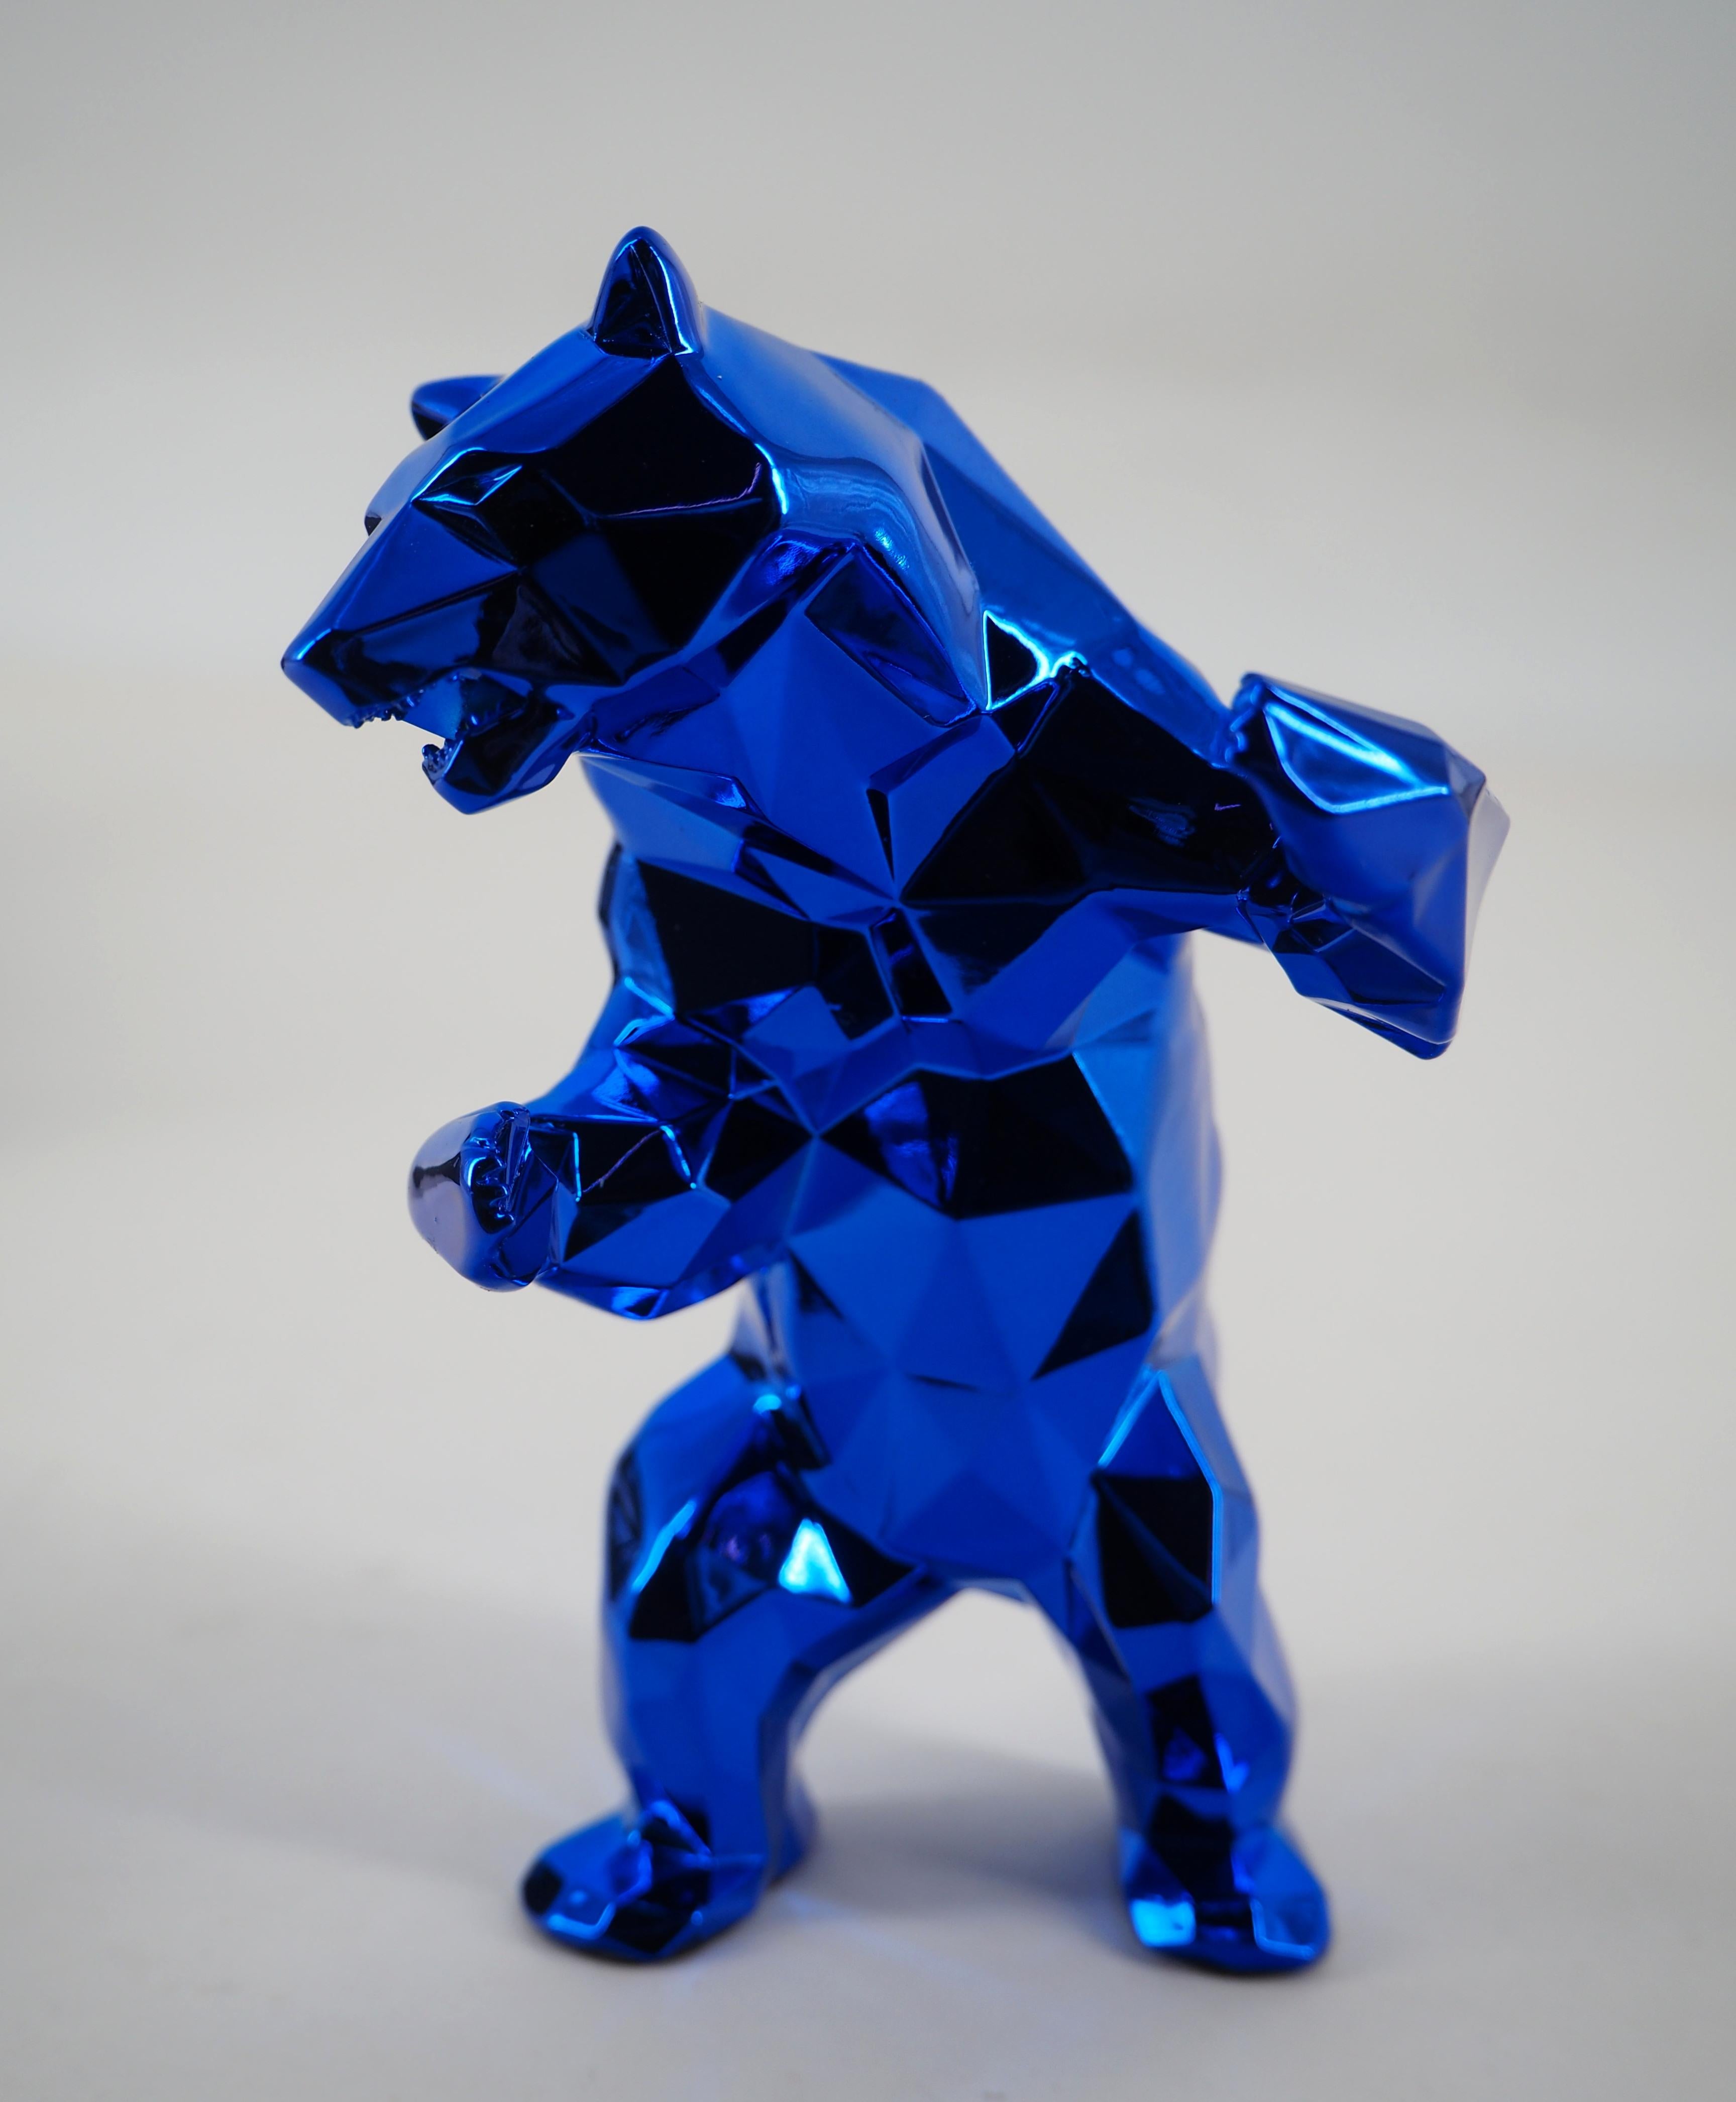 Standing Bear (Blue Edition) - Sculpture in original box with artist certificate